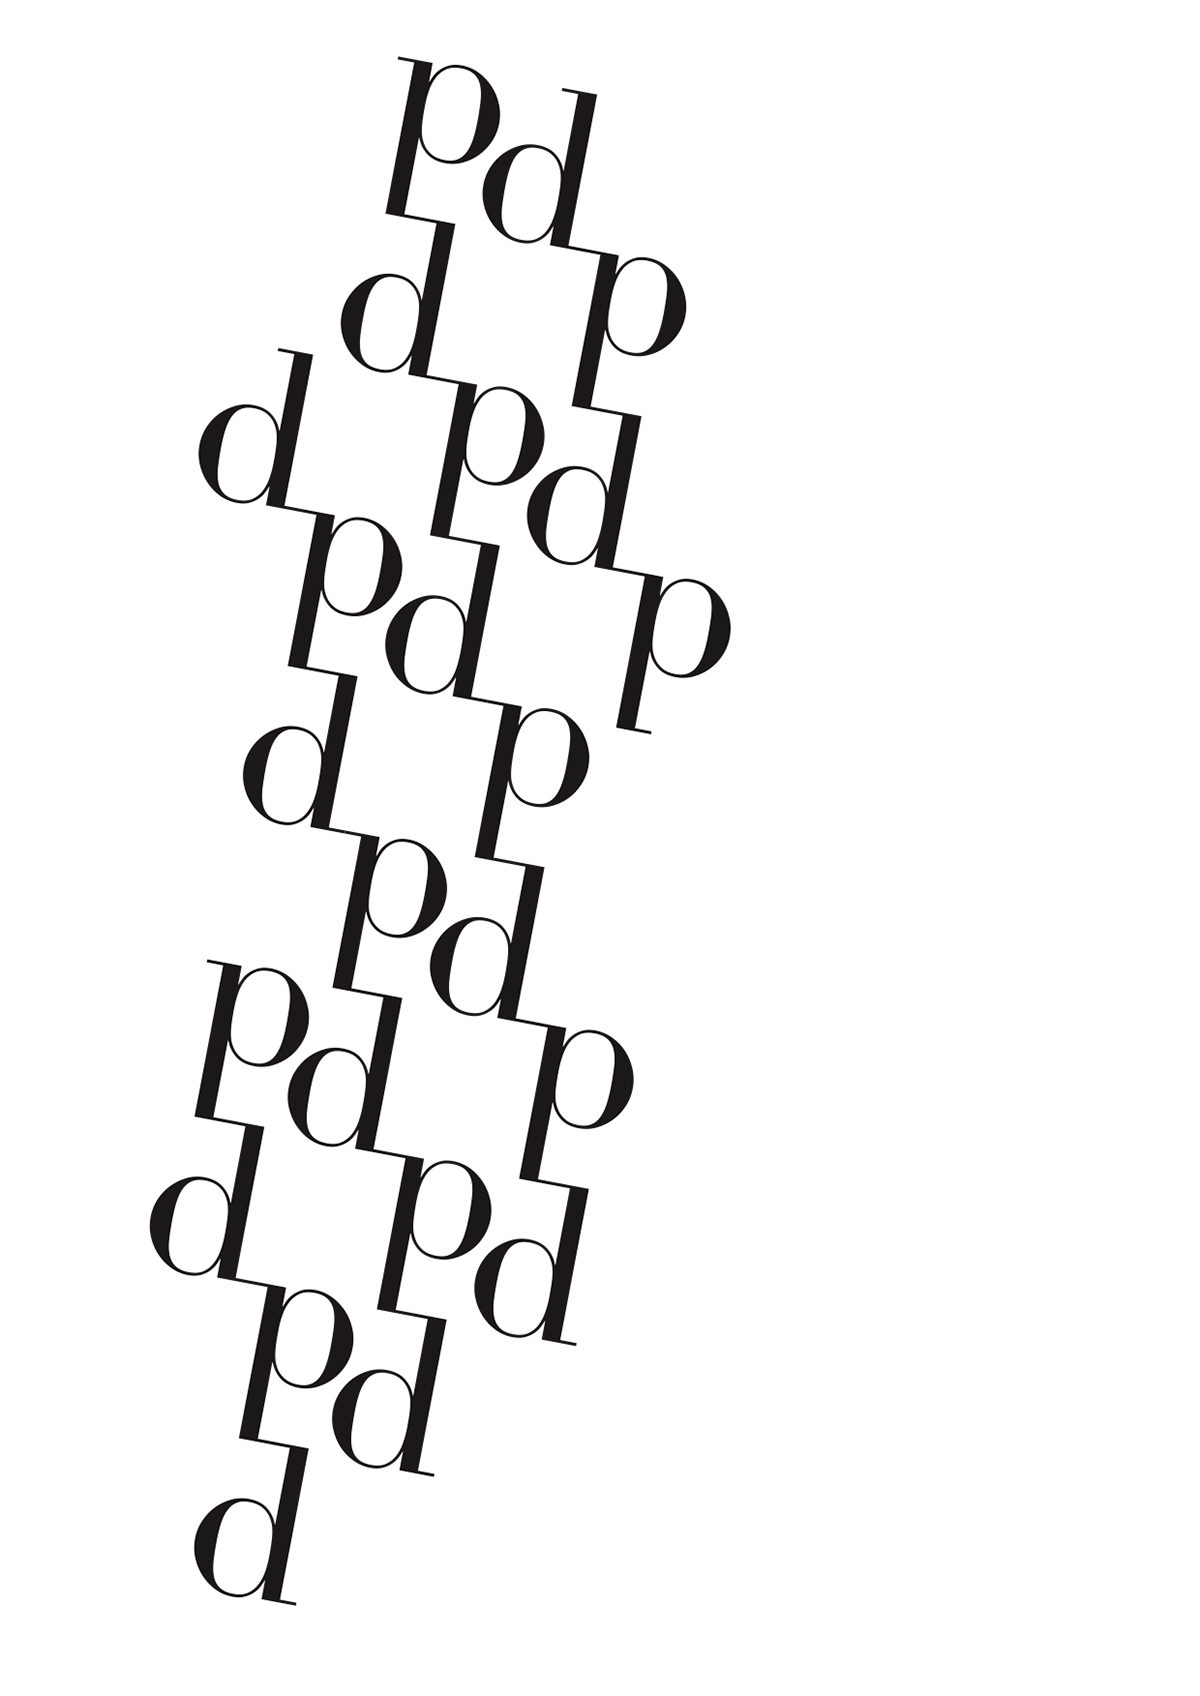 Typographic Design pattern black and white Didot Futura adobe garamond pro helvetica